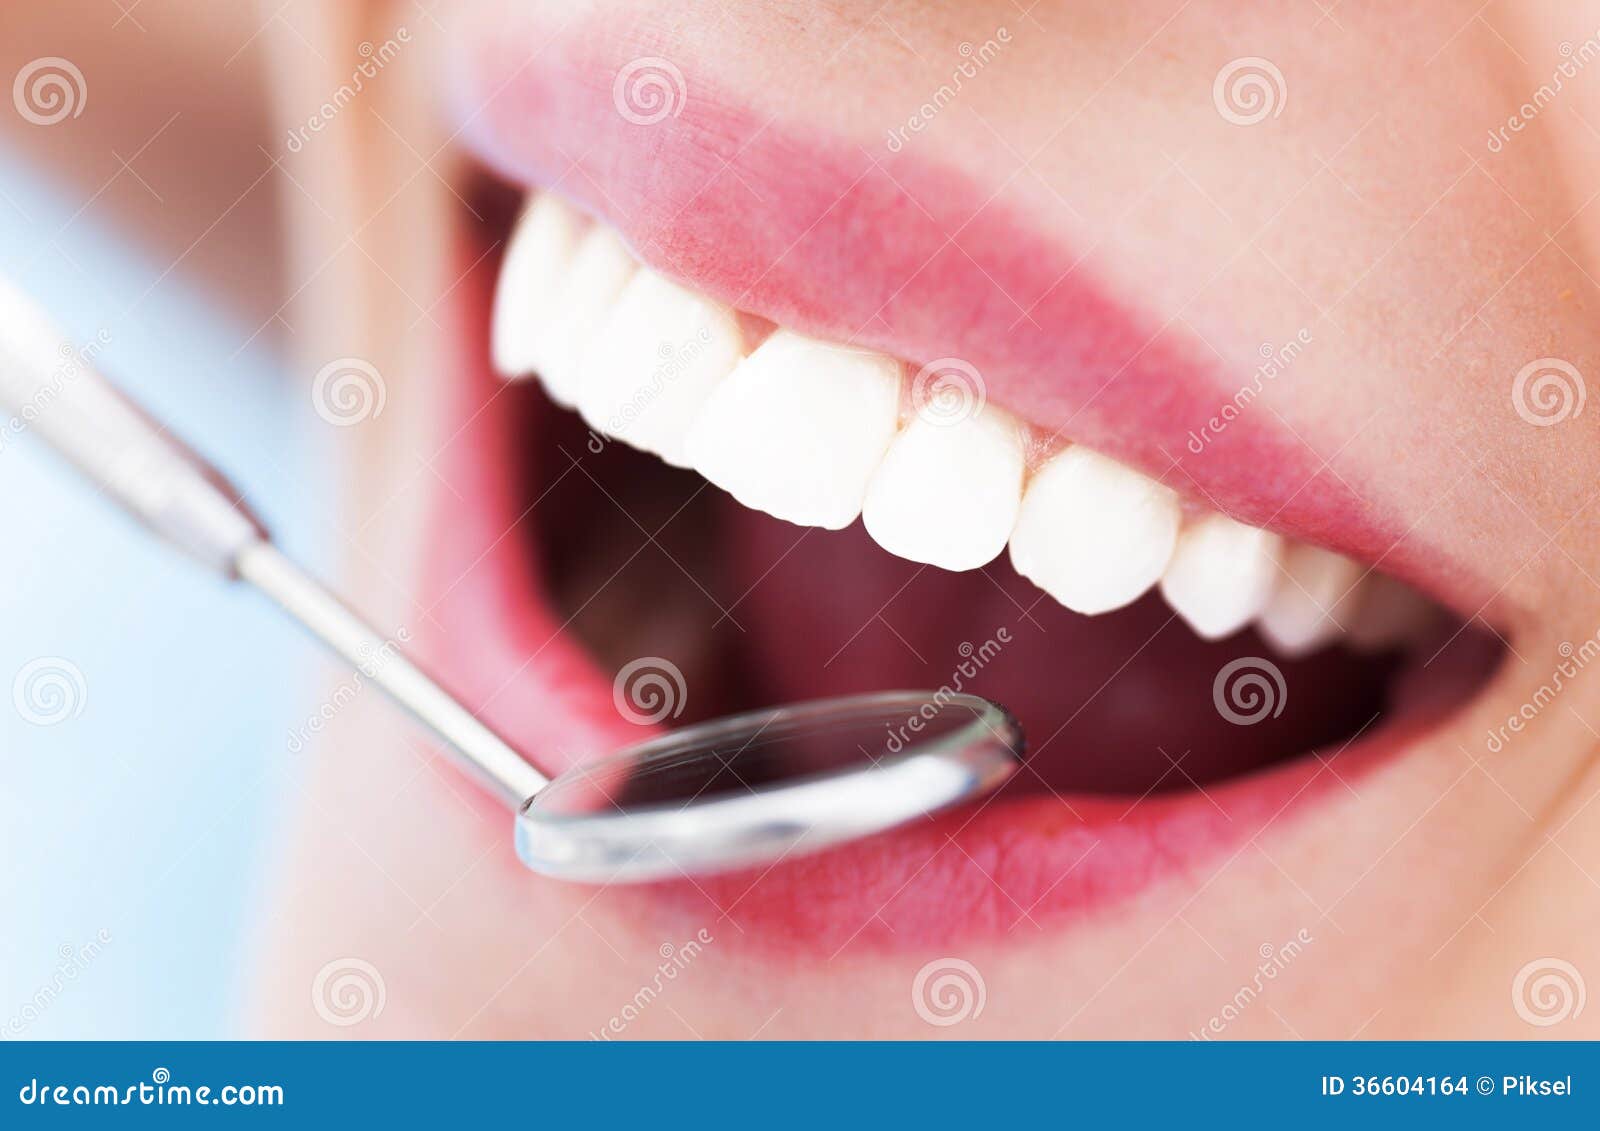 woman teeth and a dentist mirror